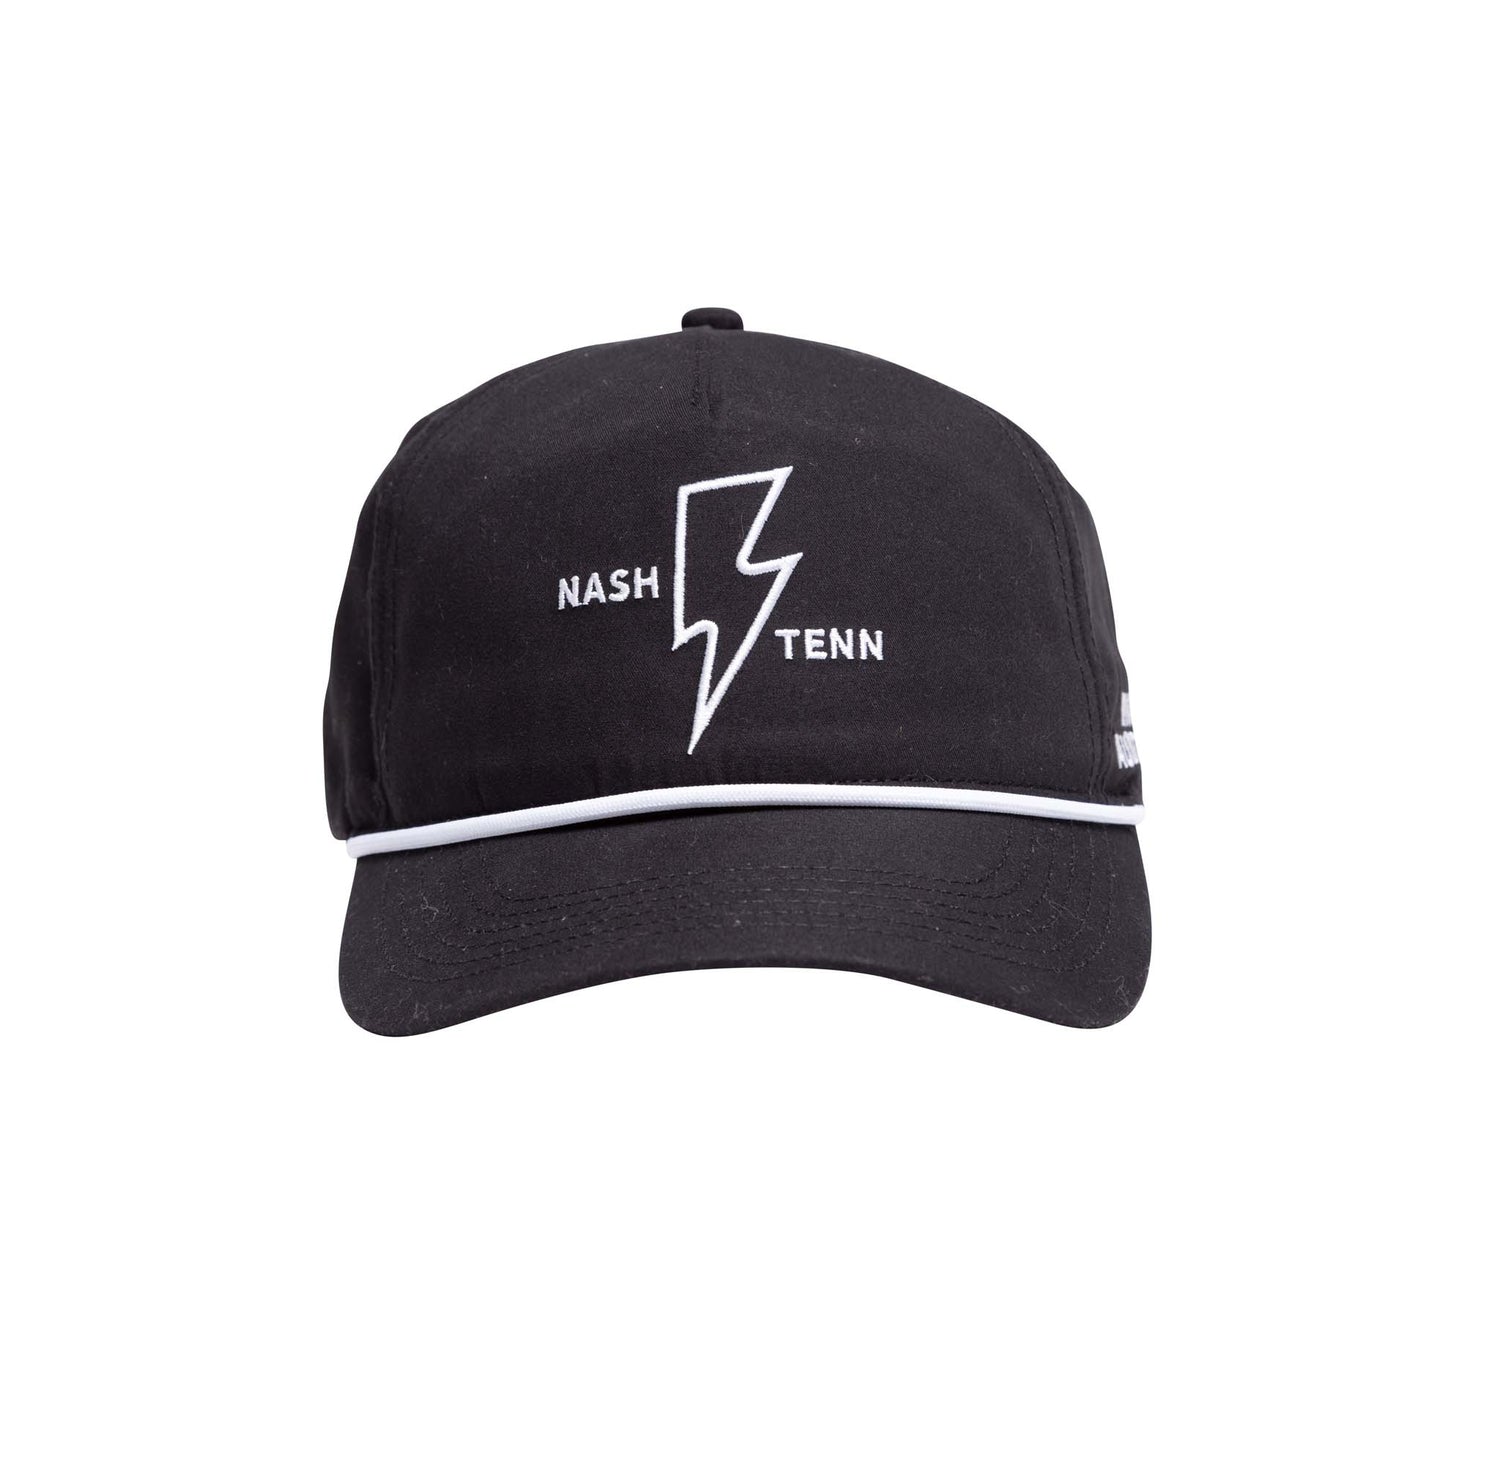 Ryman Lightning Bolt Baseball Hat